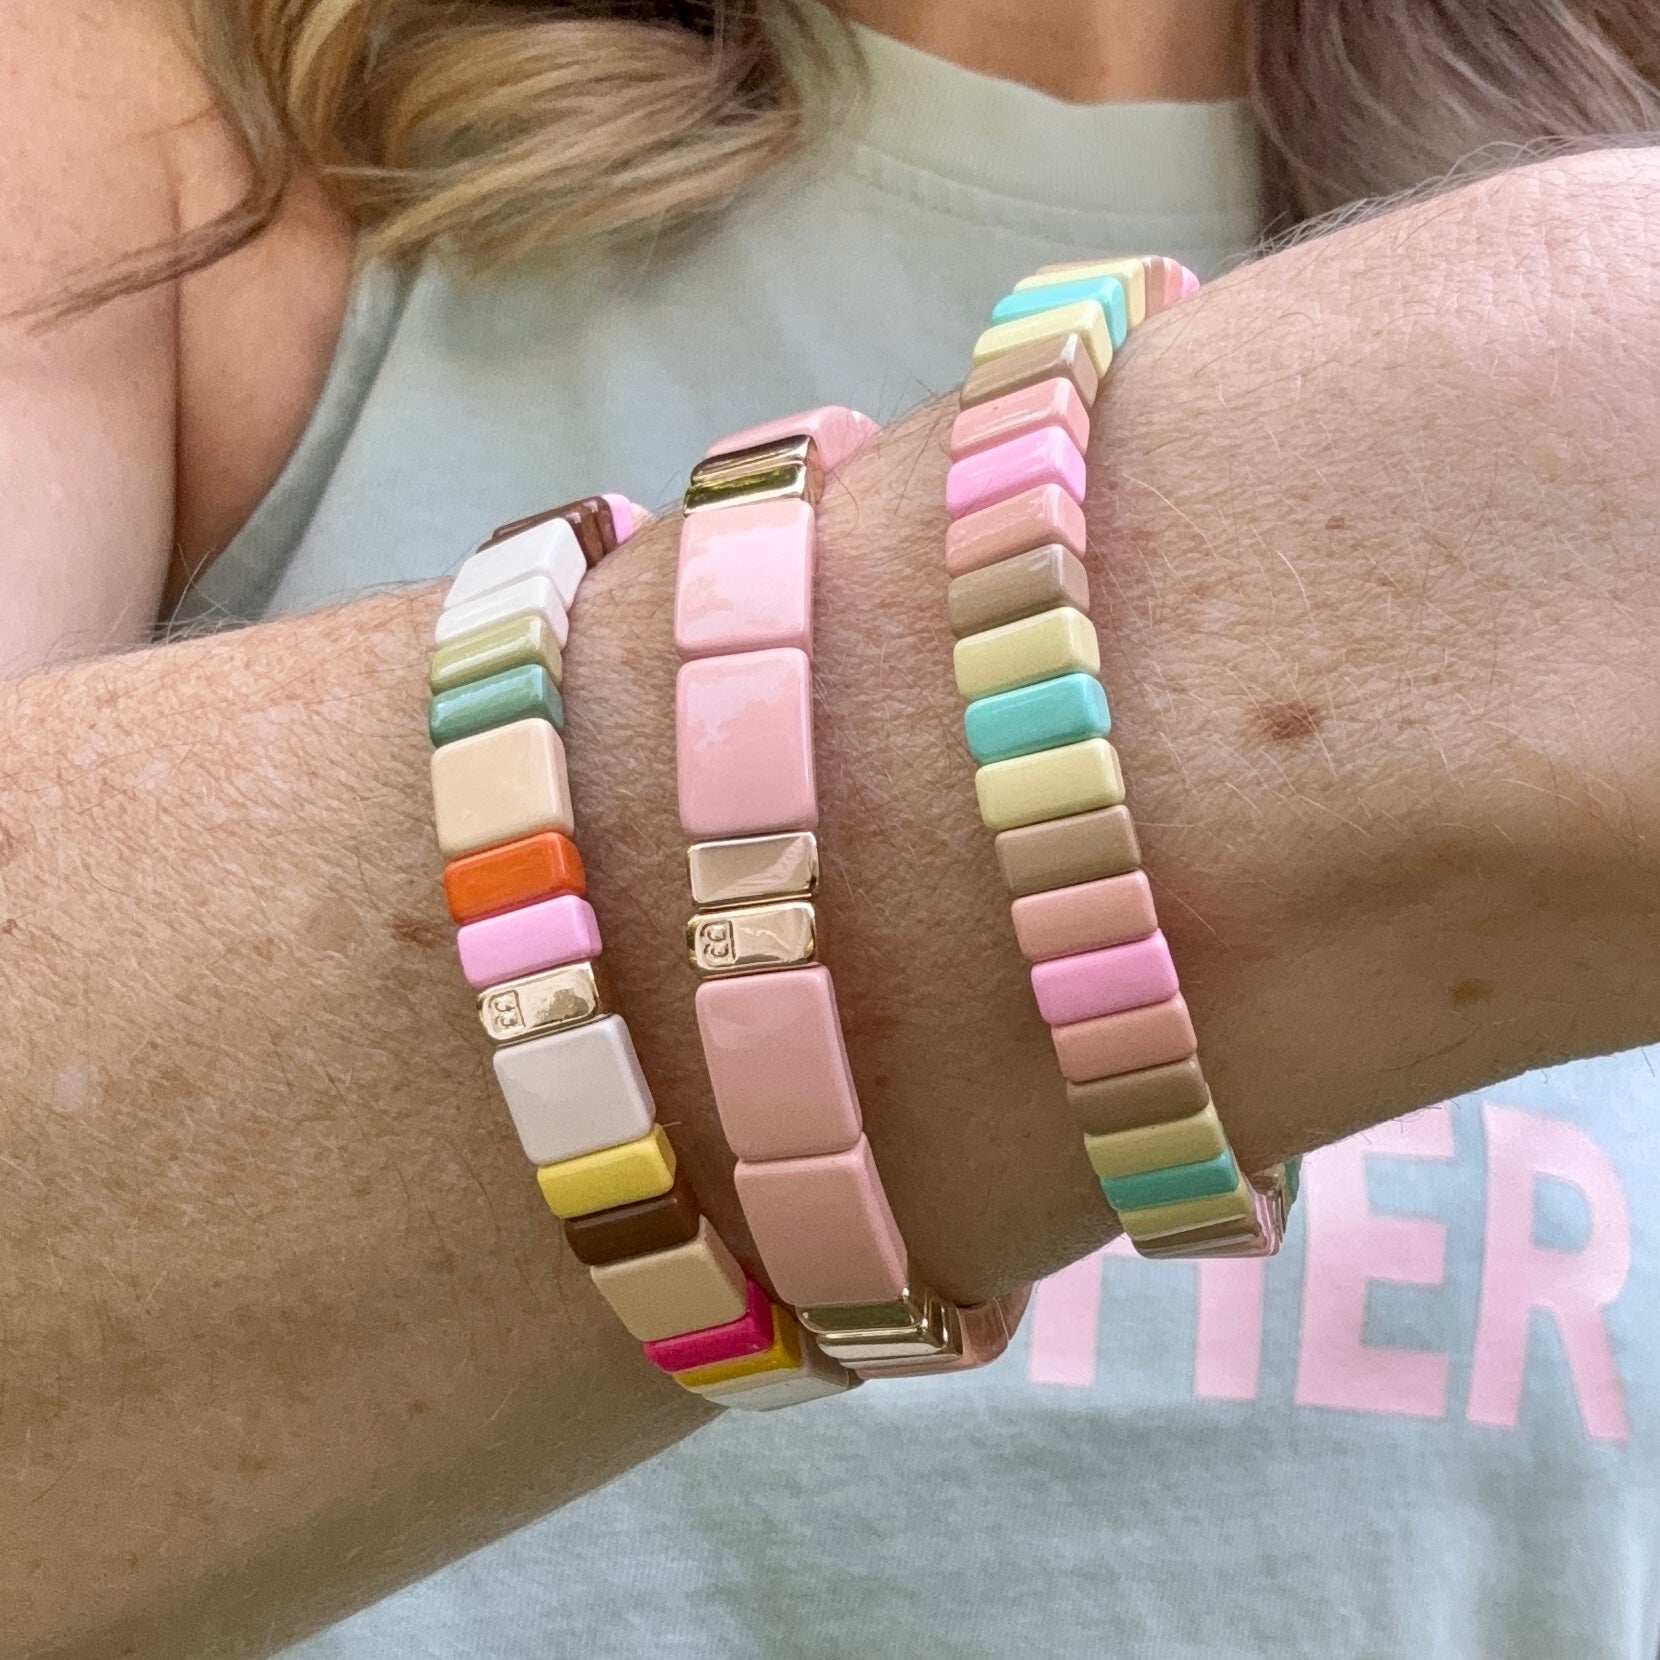 Square tile pastel multi color and cold stretch bracelet stack